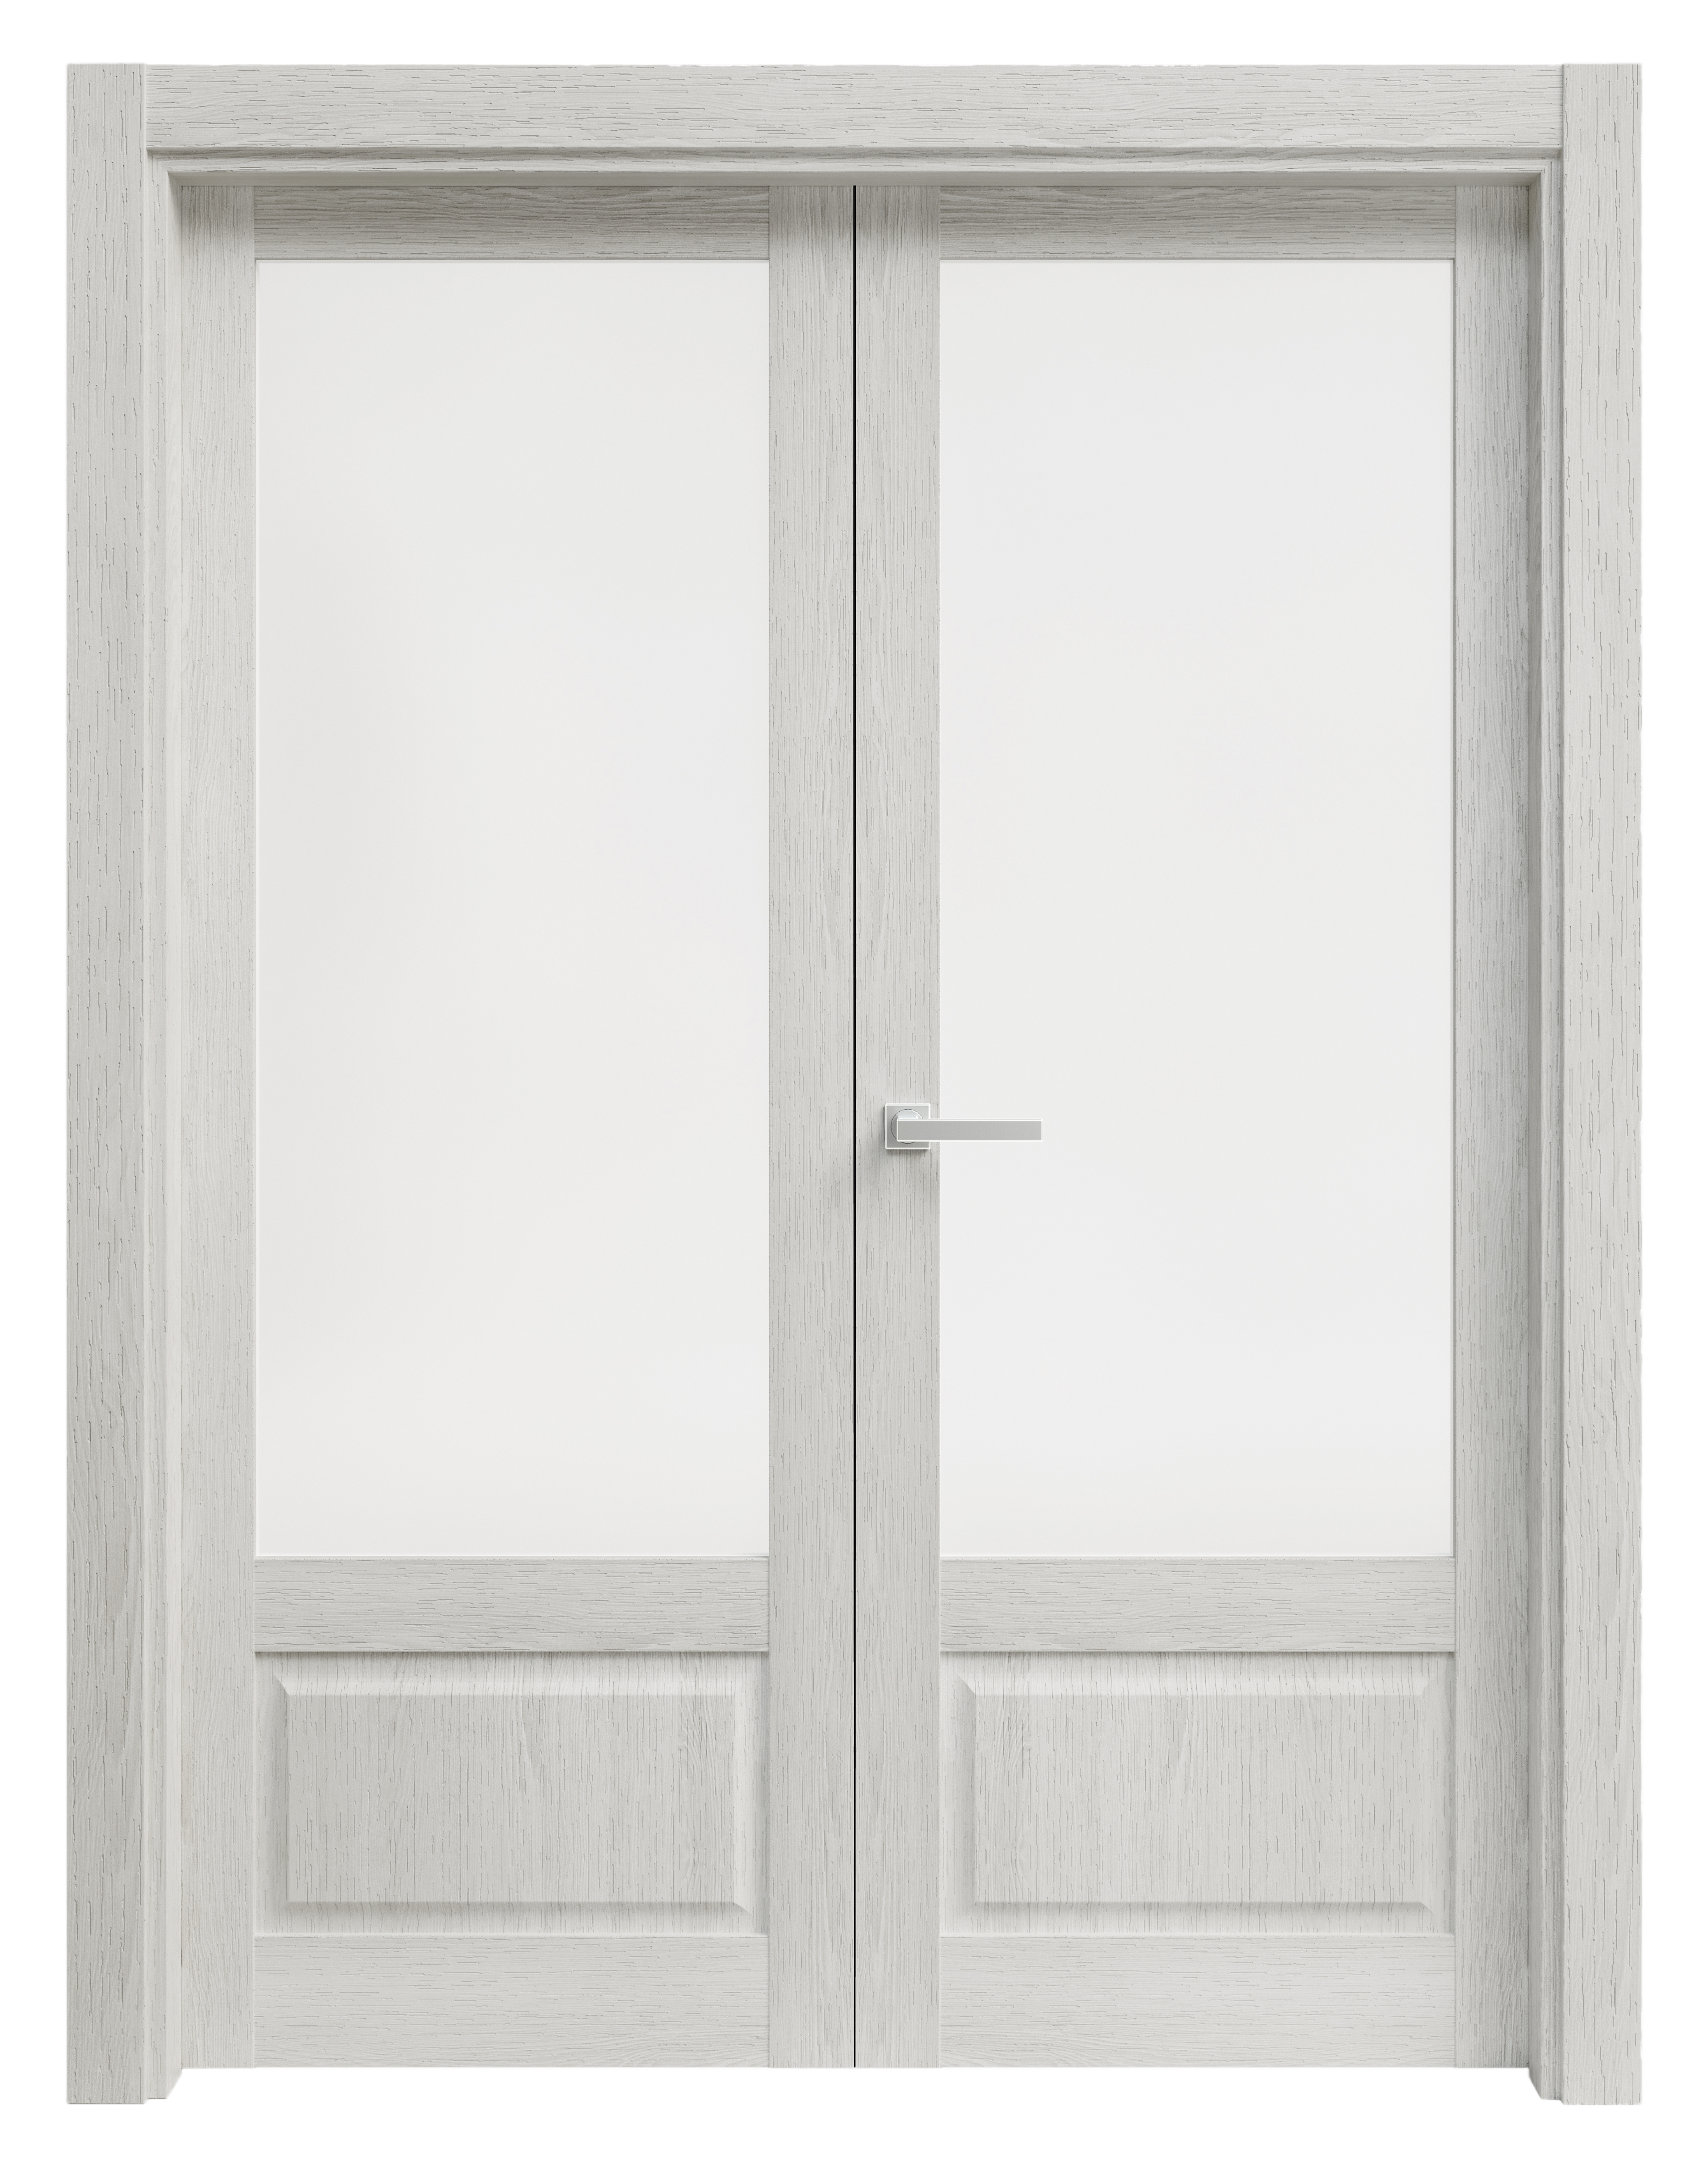 Puerta sofia plus blanco apertura izquierda con cristal 9x115cm